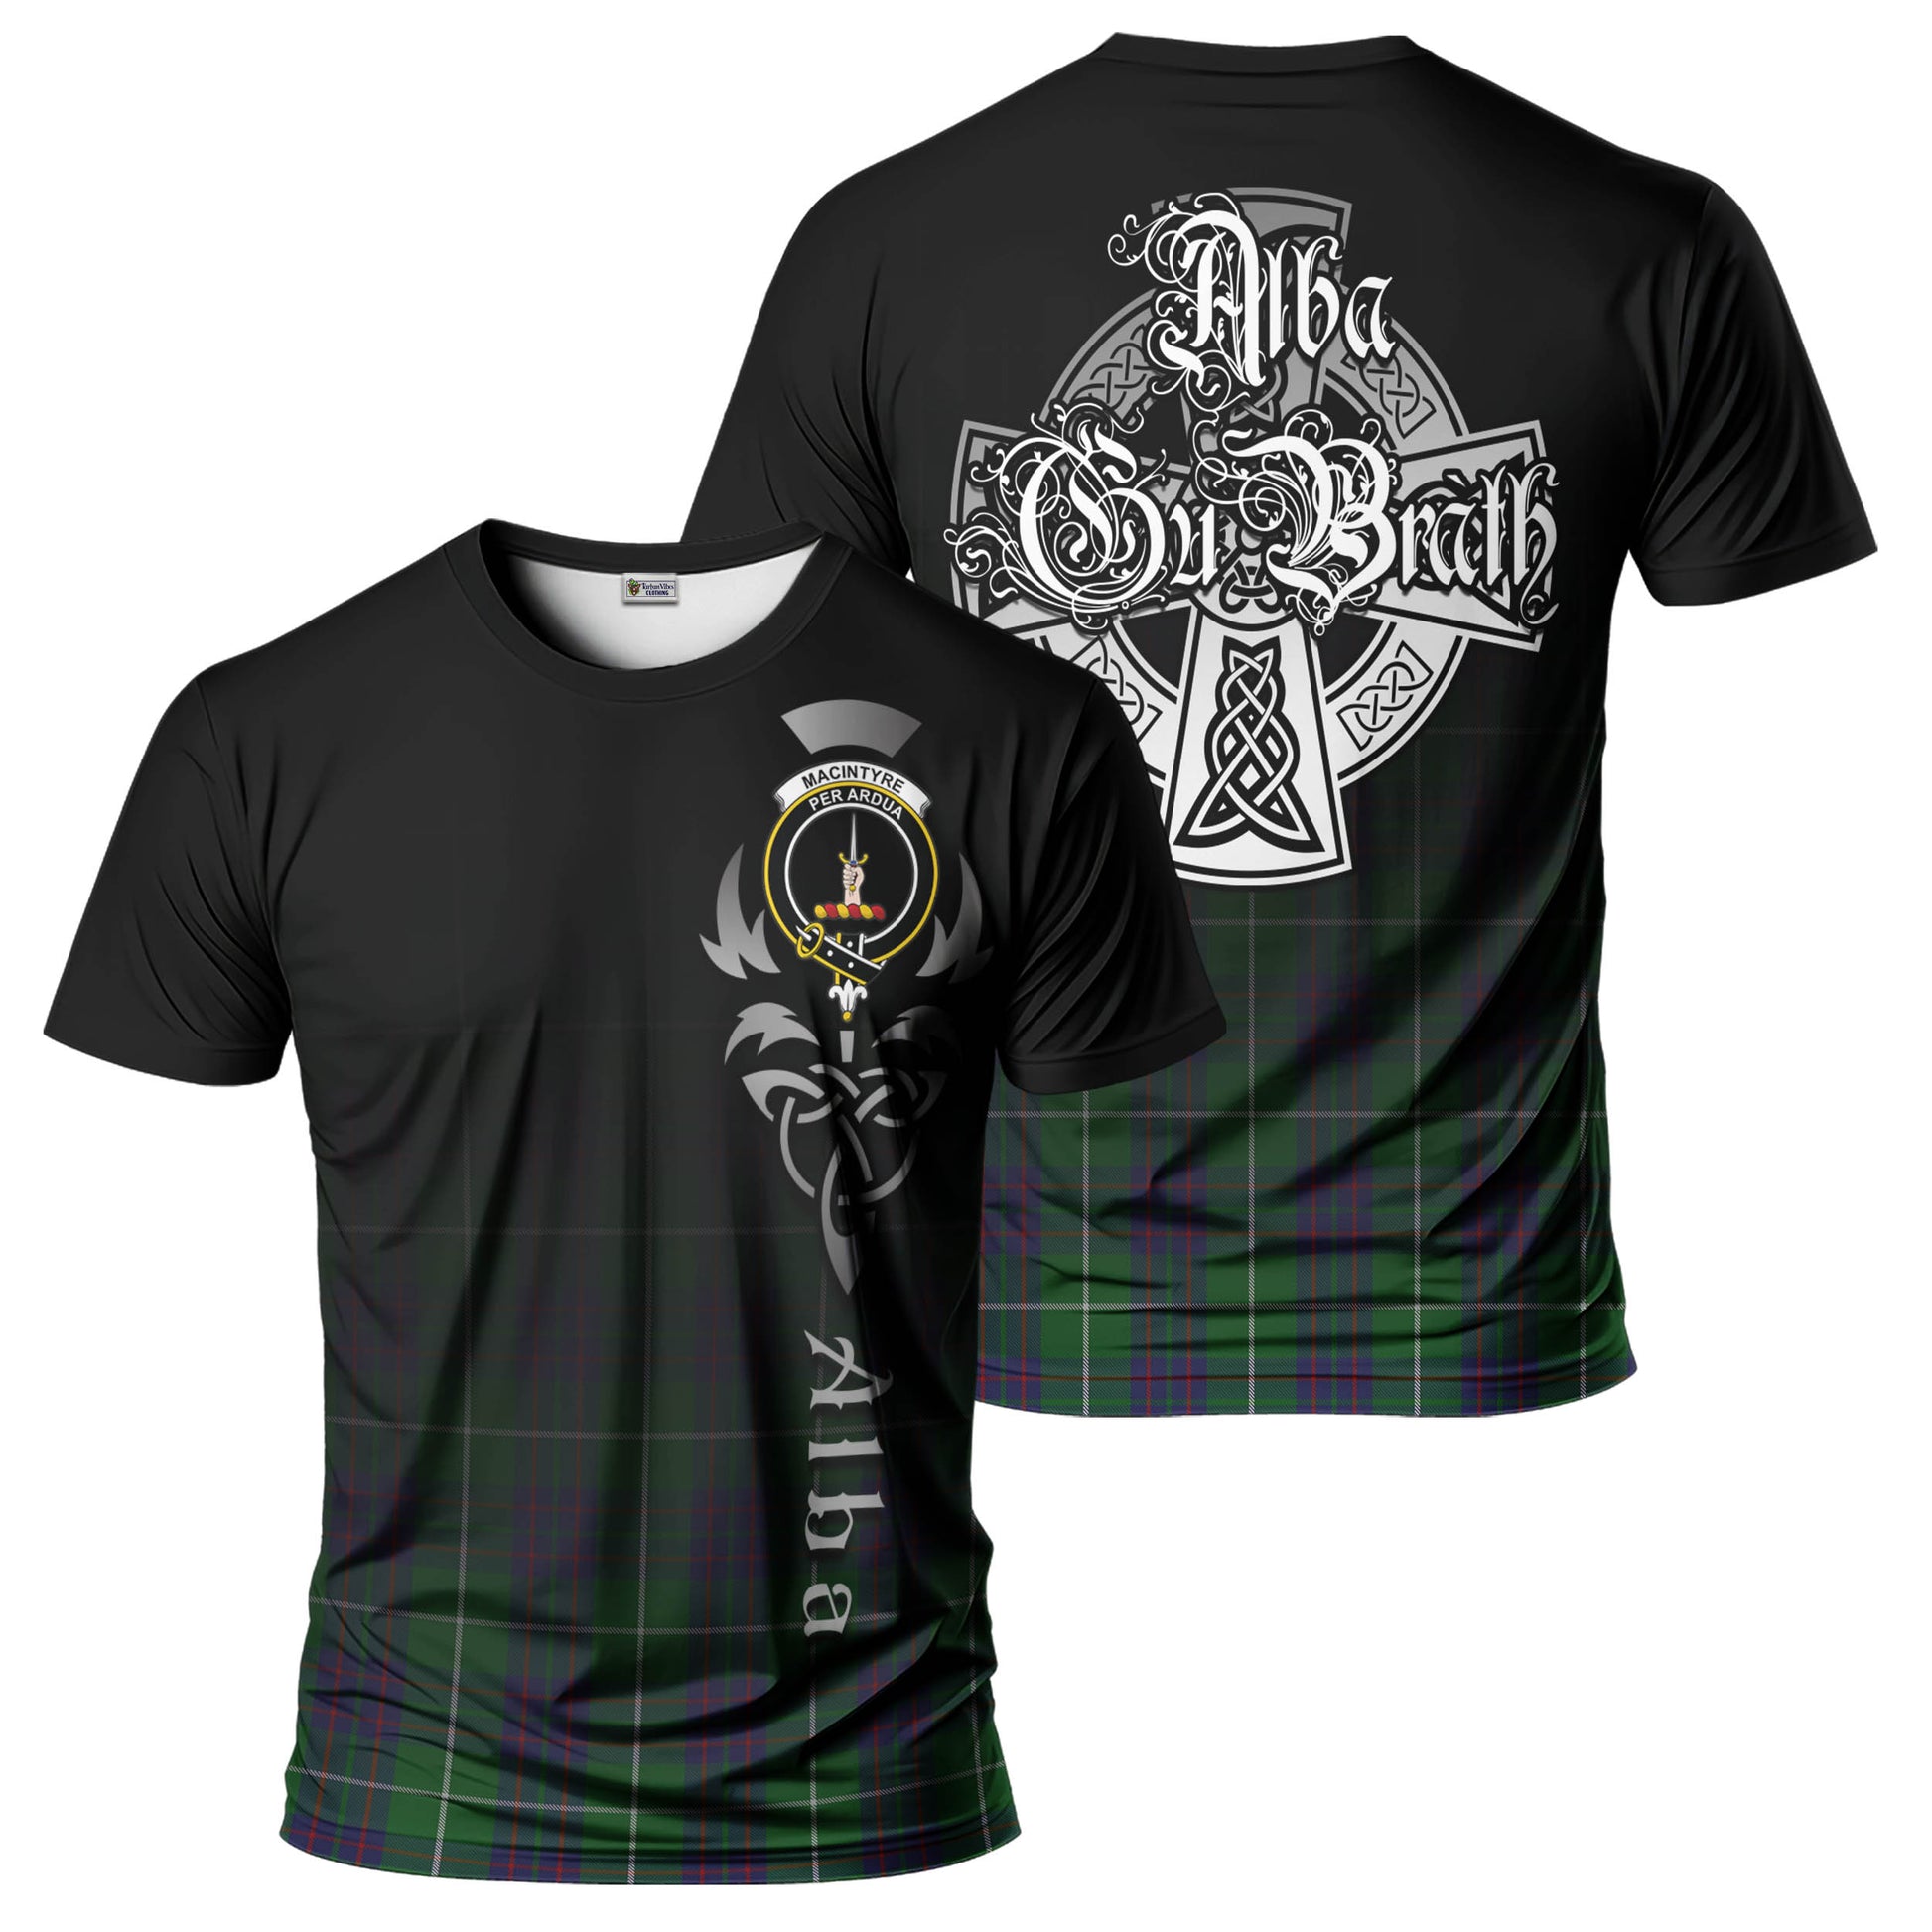 Tartan Vibes Clothing MacIntyre Hunting Tartan T-Shirt Featuring Alba Gu Brath Family Crest Celtic Inspired